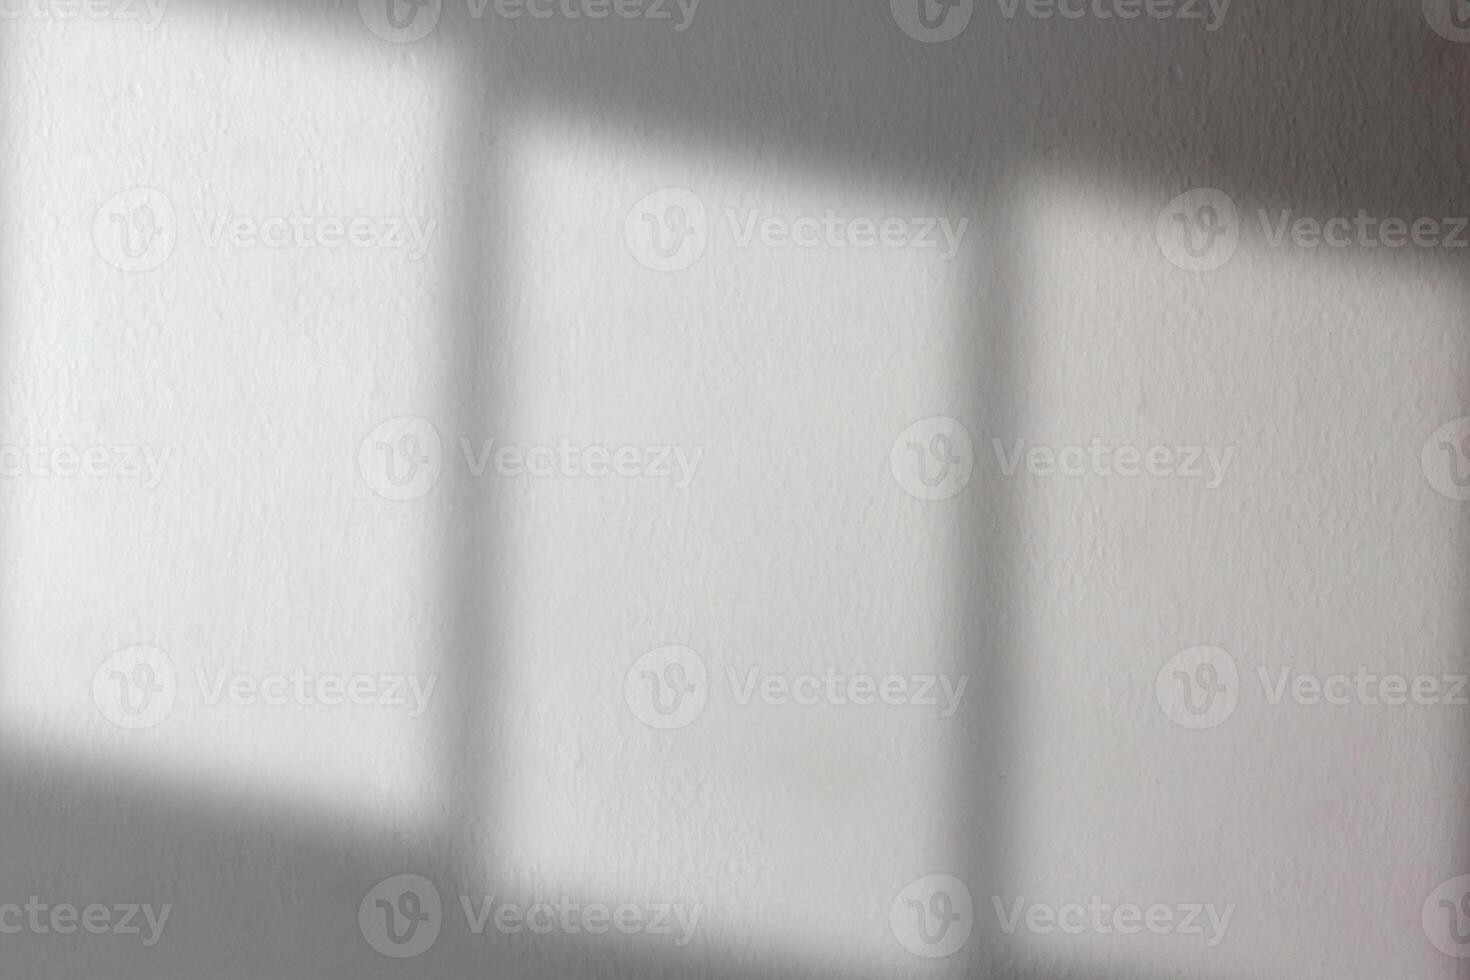 realista e natural borrado do janela sombra e luz sobre branco muro. papel textura. abstrato fundo com esvaziar espaço para texto. zombar acima modelo estilo. foto